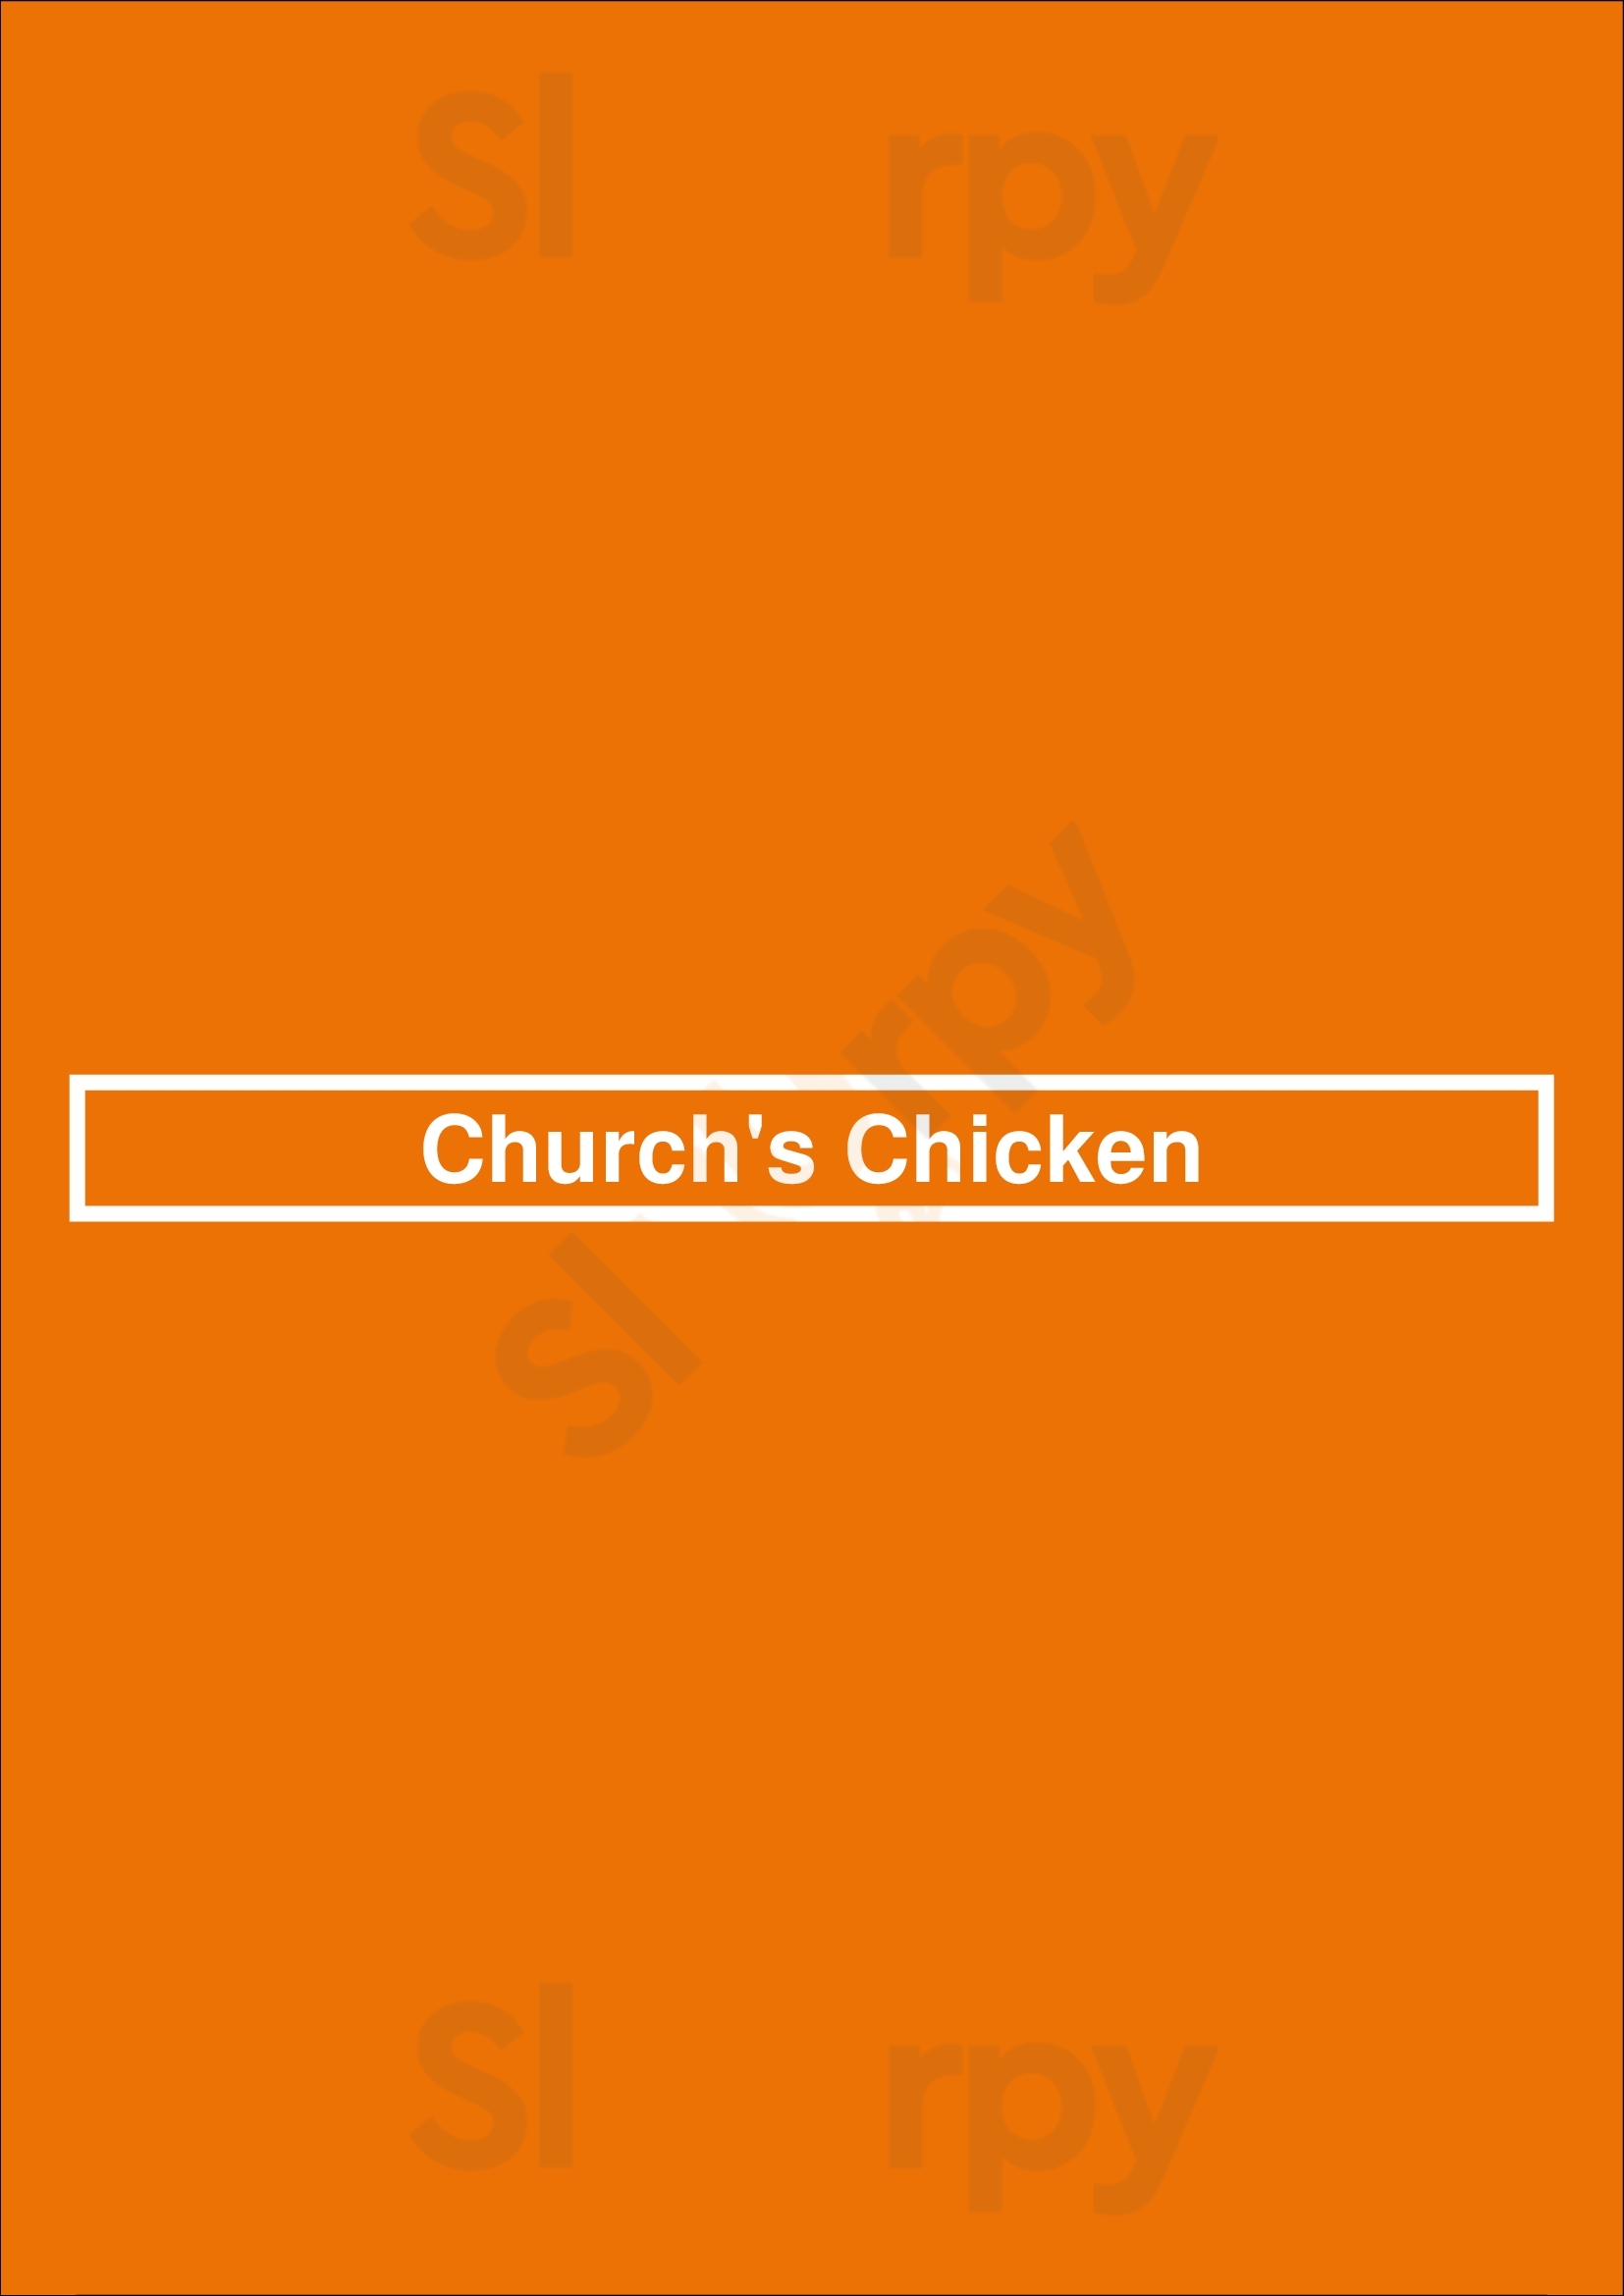 Church's Texas Chicken Kansas City Menu - 1